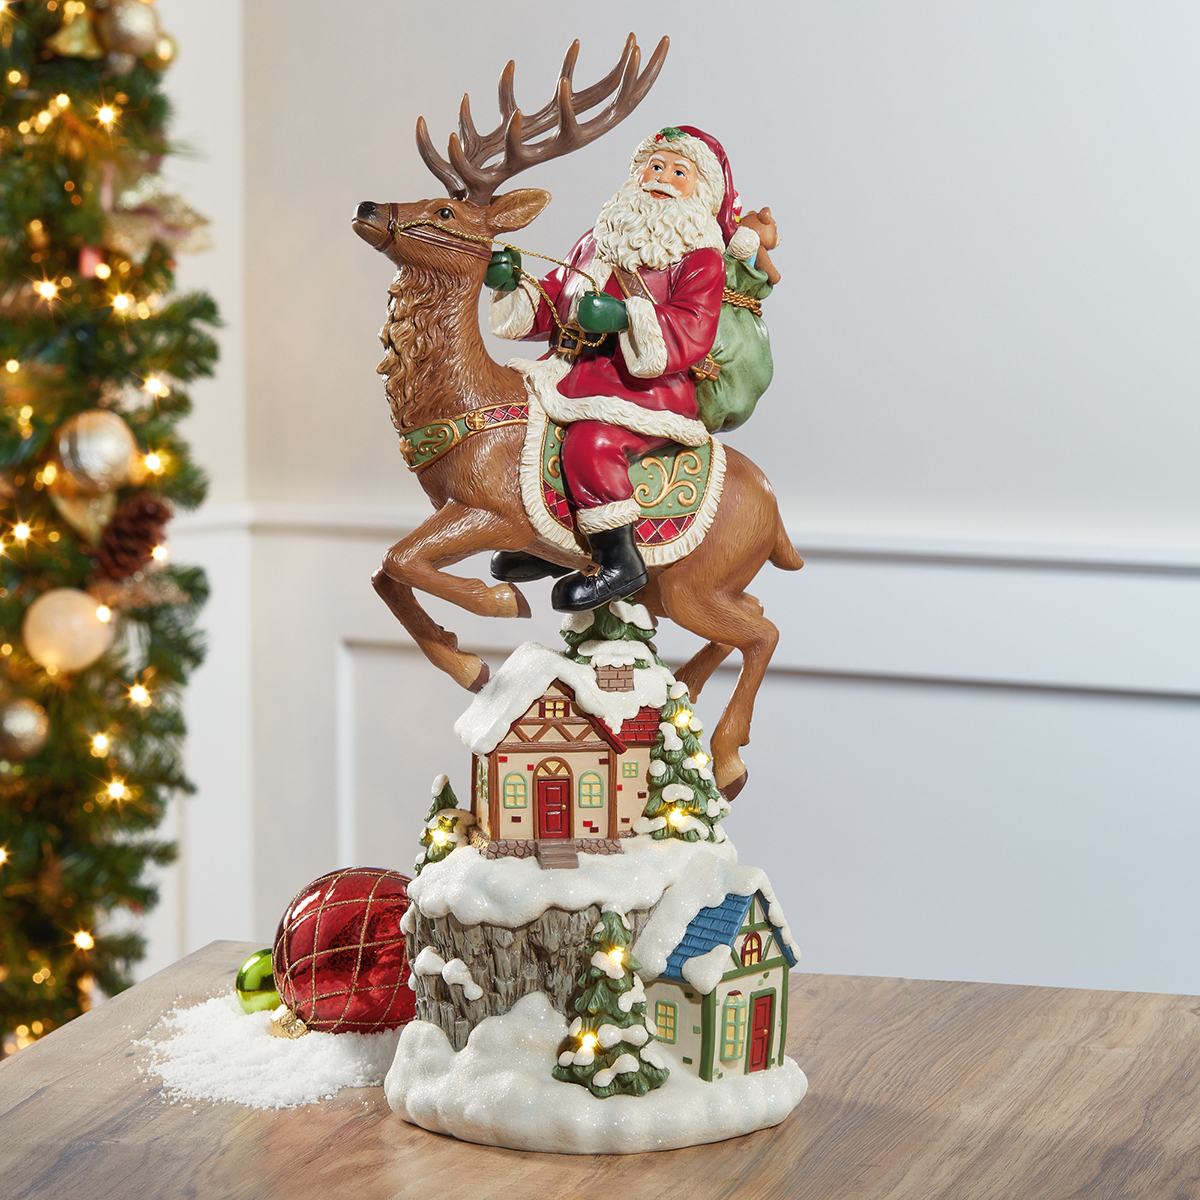 Flying Reindeer and santa lifestyle image